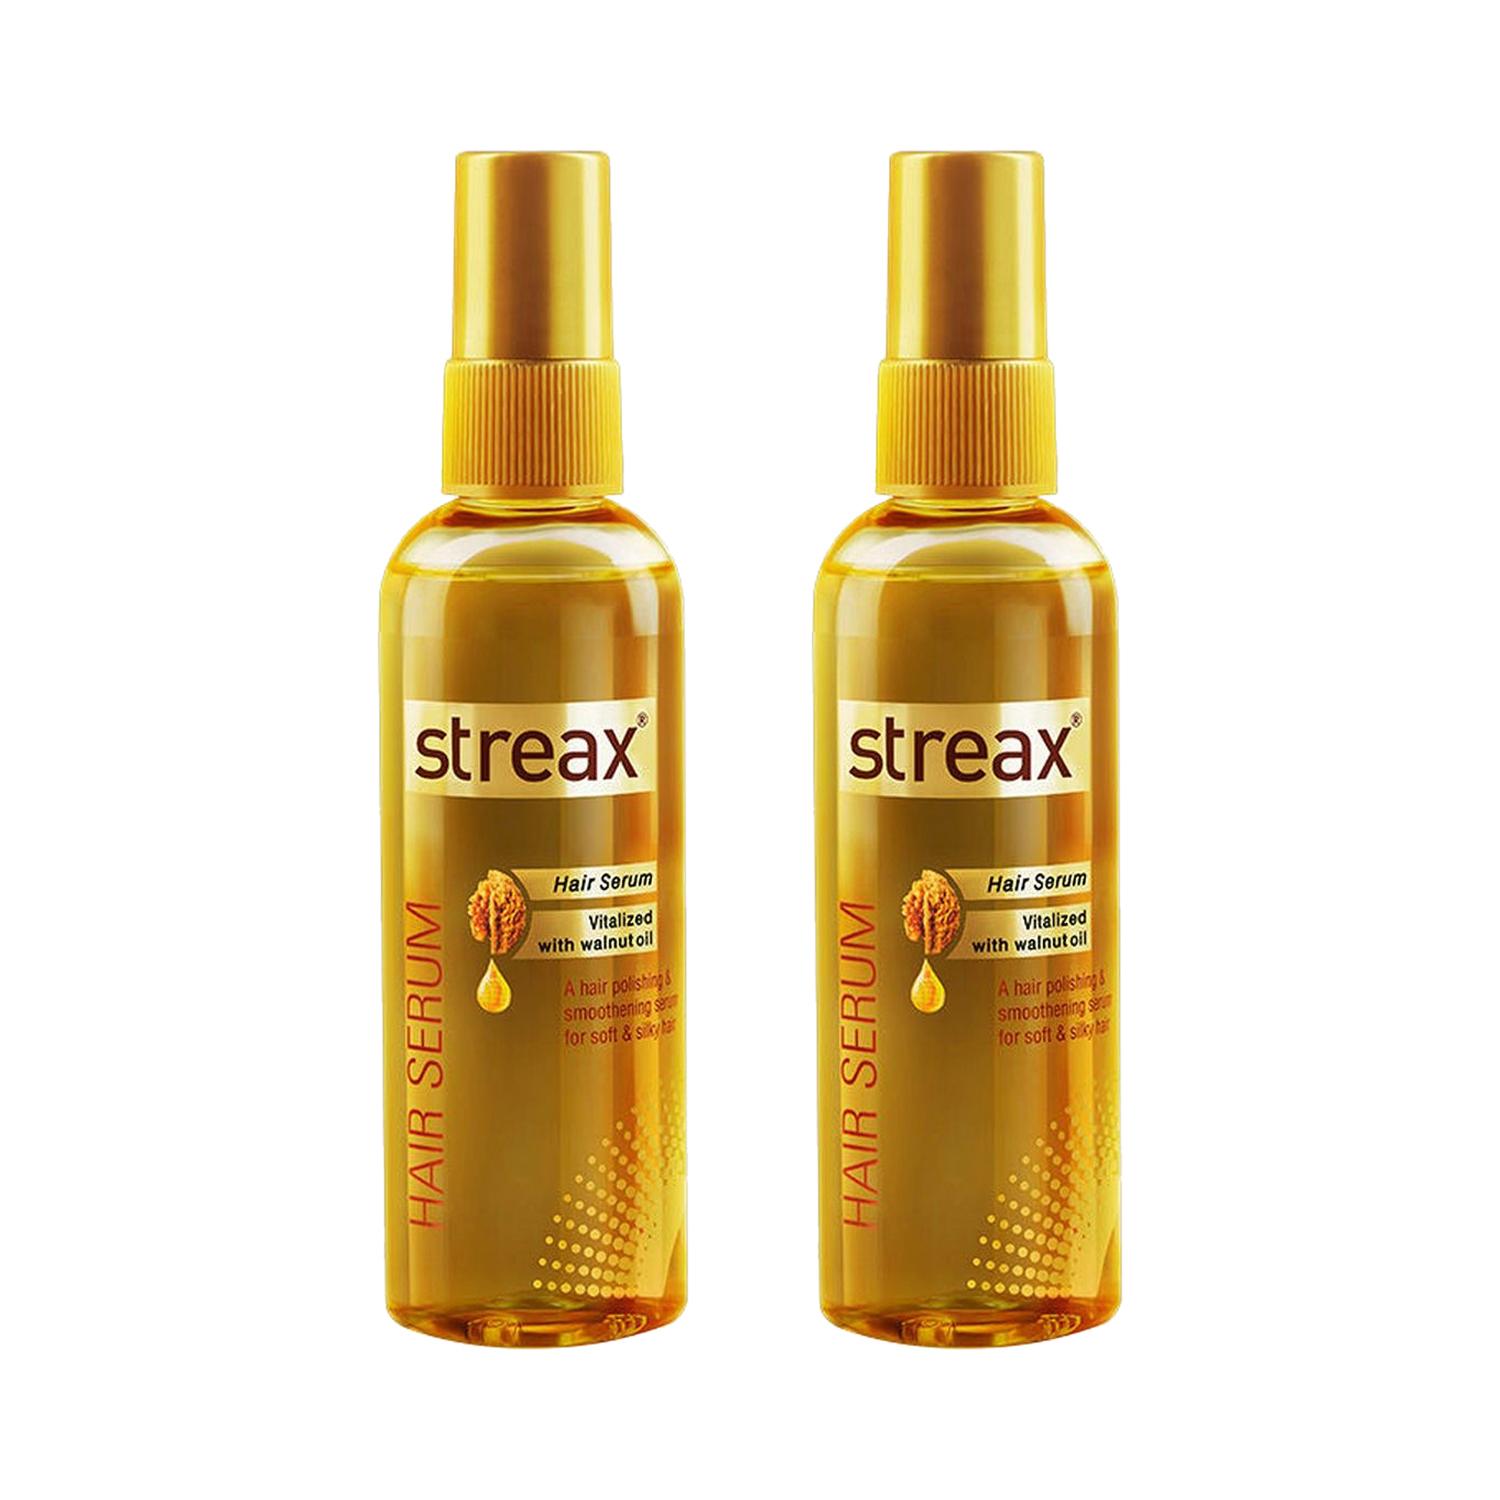 Streax | Streax Hair Serum vitalised with Walnut Oil (100ml) - (Pack of 2) Combo